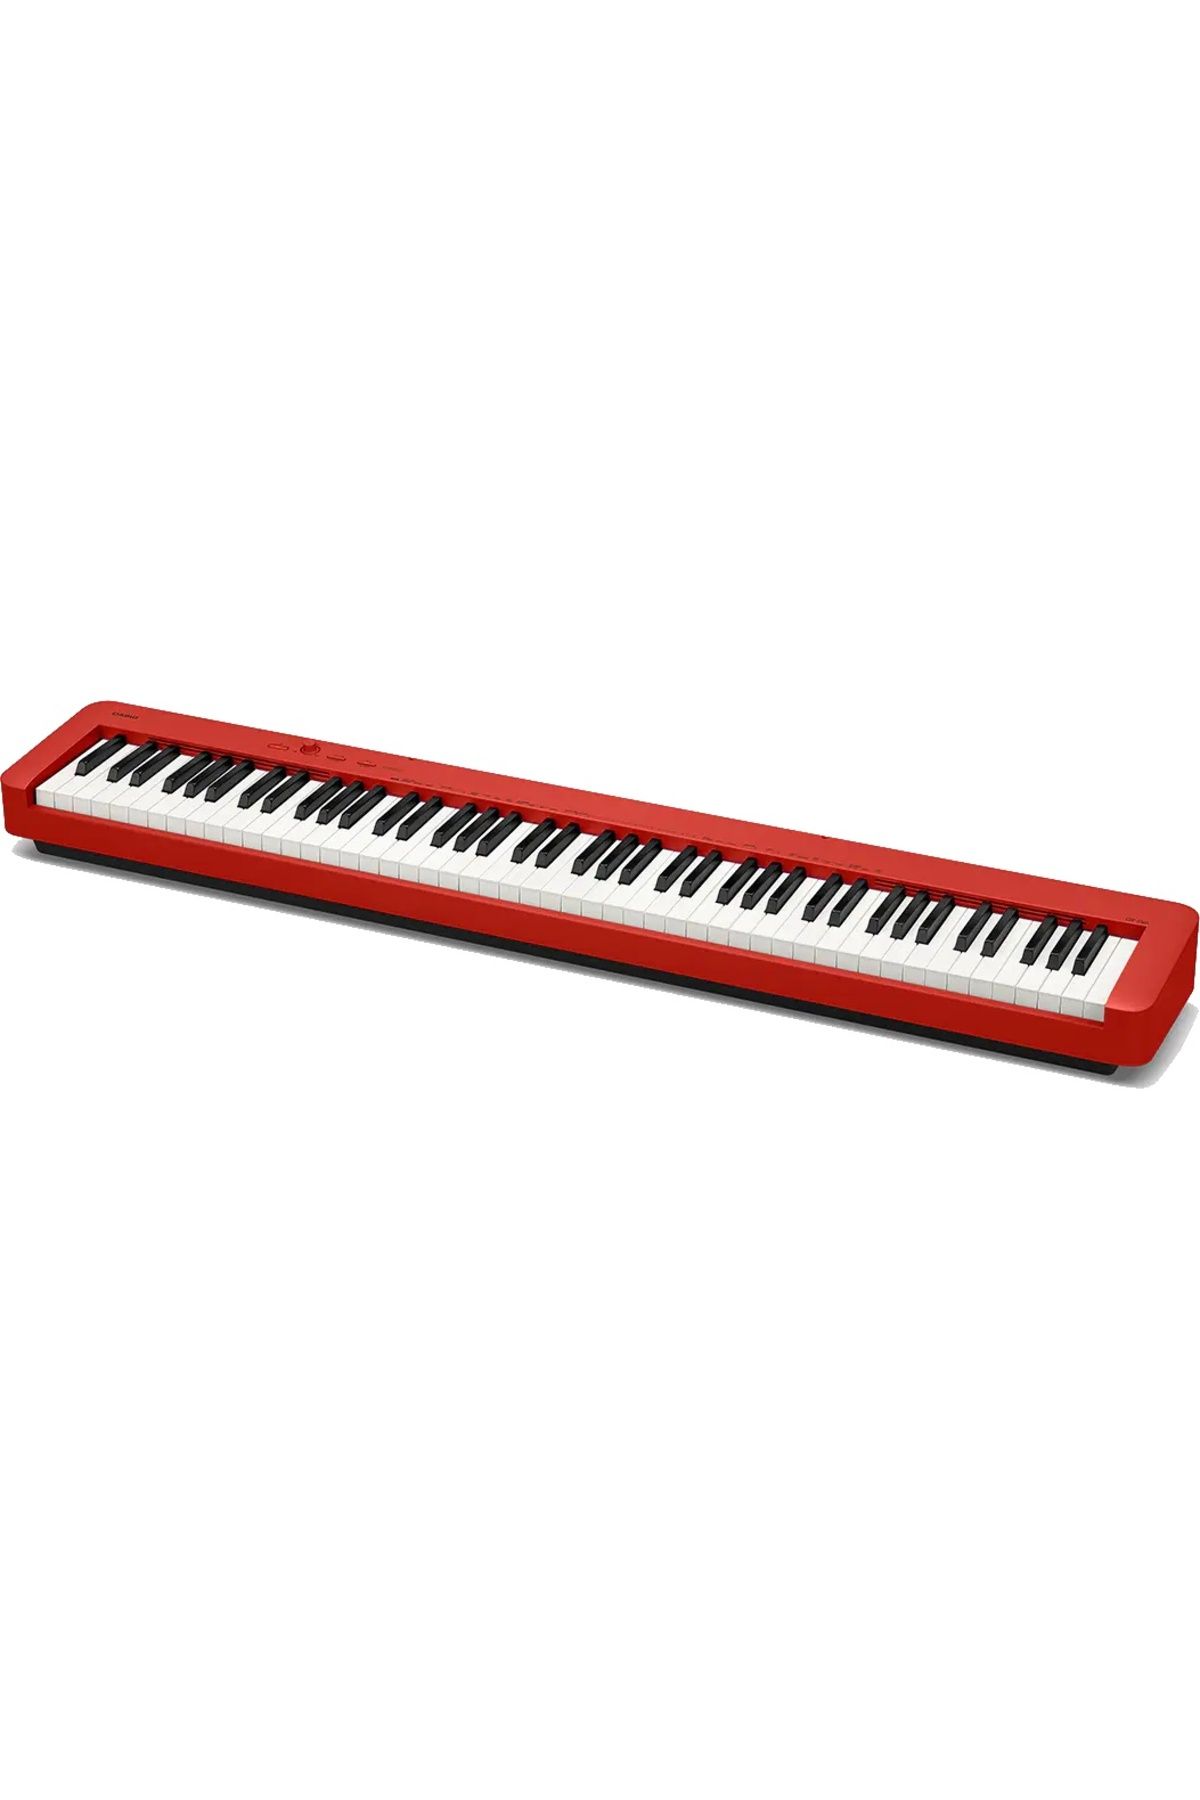 Casio Cdp-s160rdc2 Kırmızı Taşınabilir Dijital Piyano